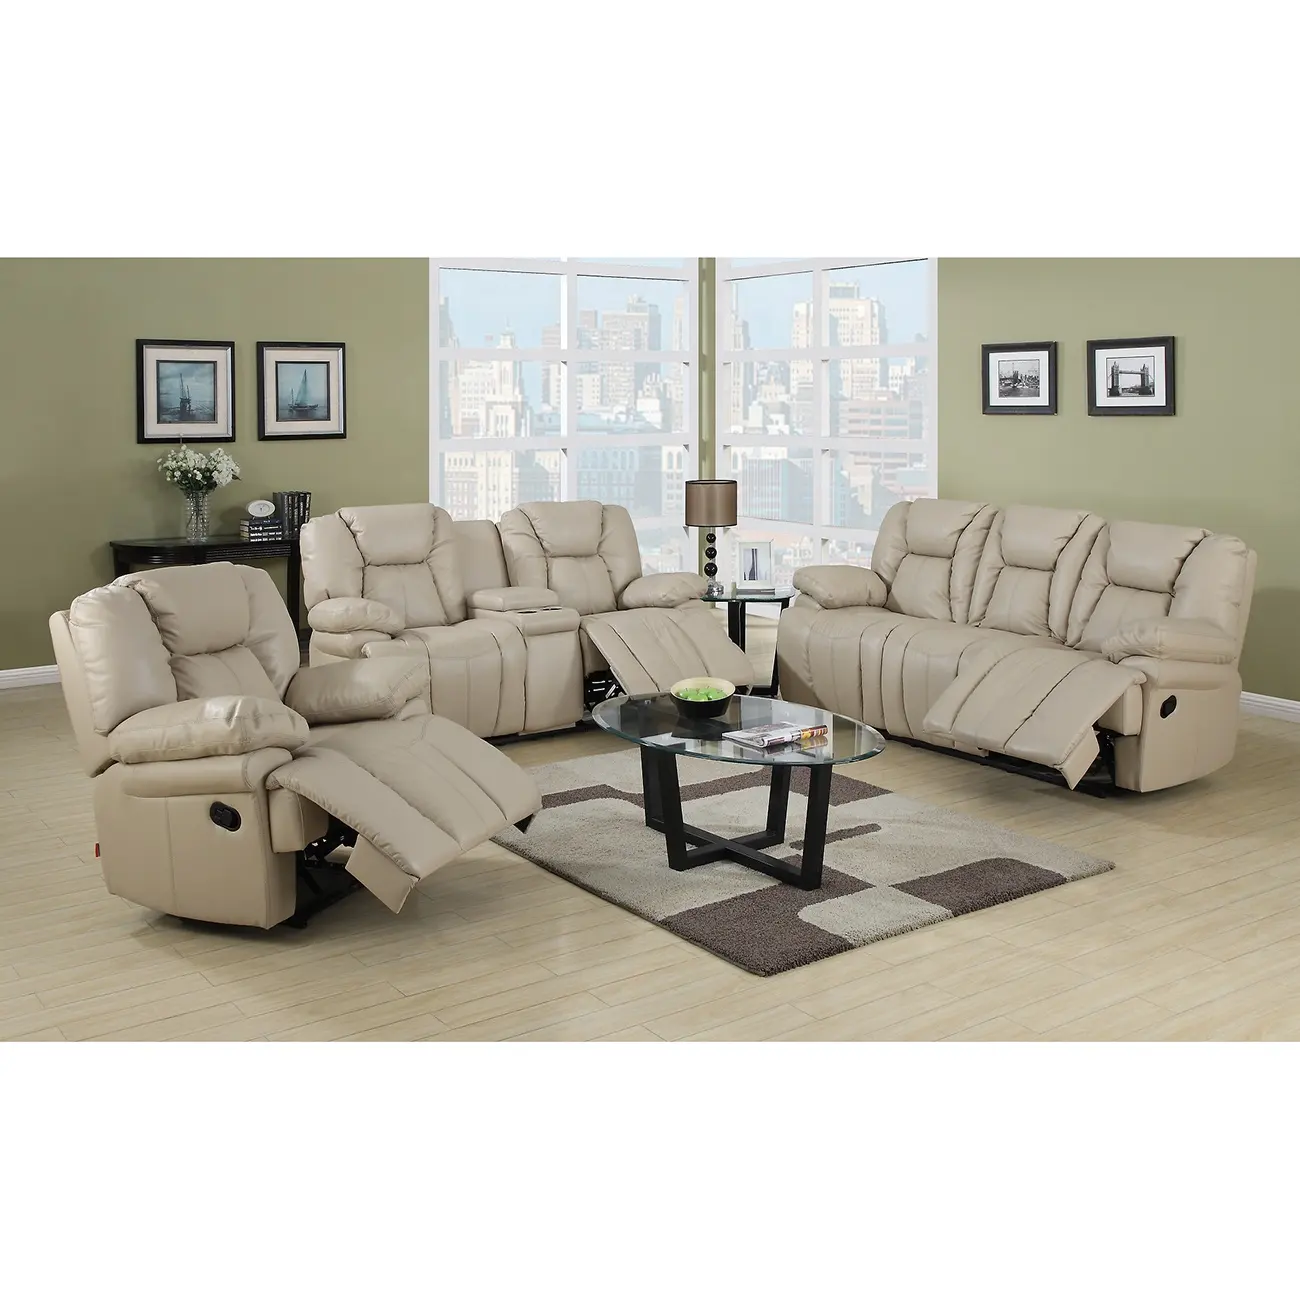 Designed recliner sofa set for living room furniture sofa set 7 seater sectional modern TV recliner chair